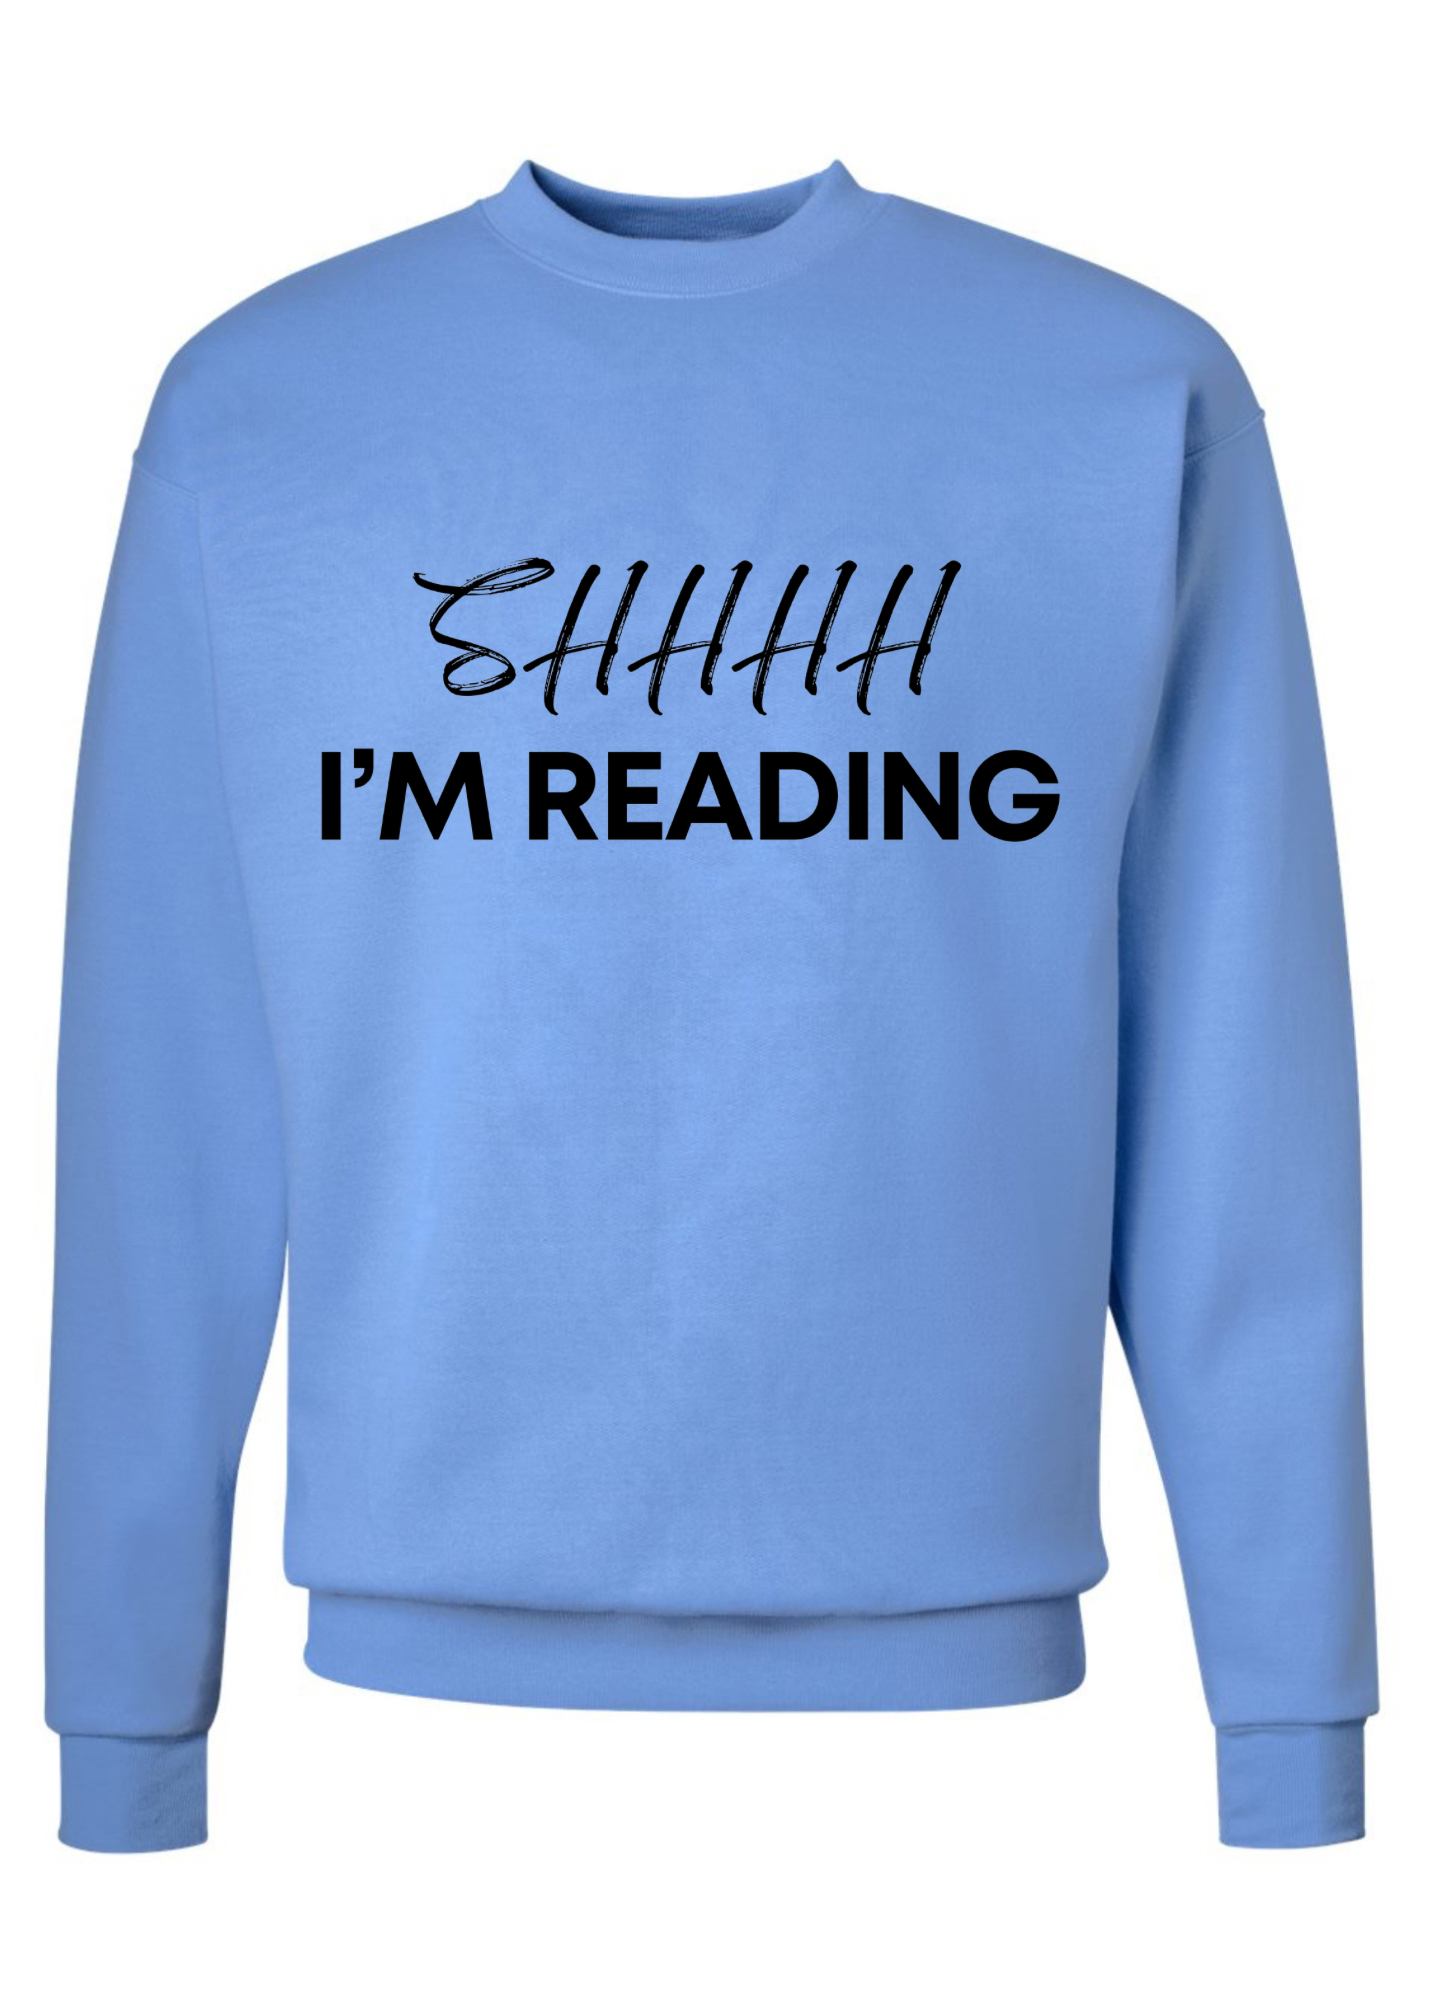 Shhhh I’m Reading Crew Sweatshirt  - 3 colors available